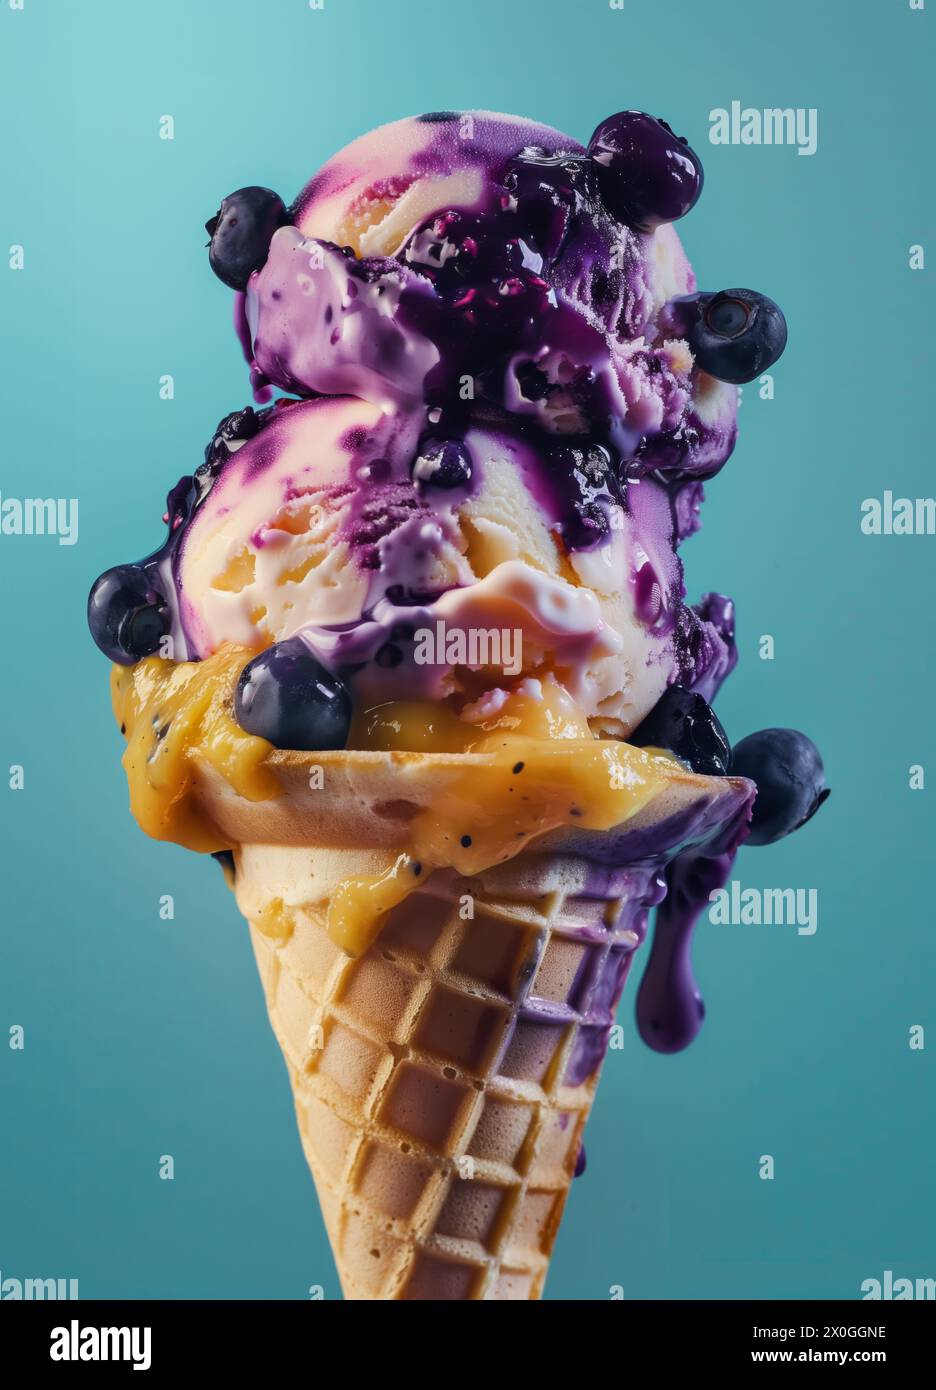 Two scoops of Blueberry ice cream on top ice cream cone Stock Photo